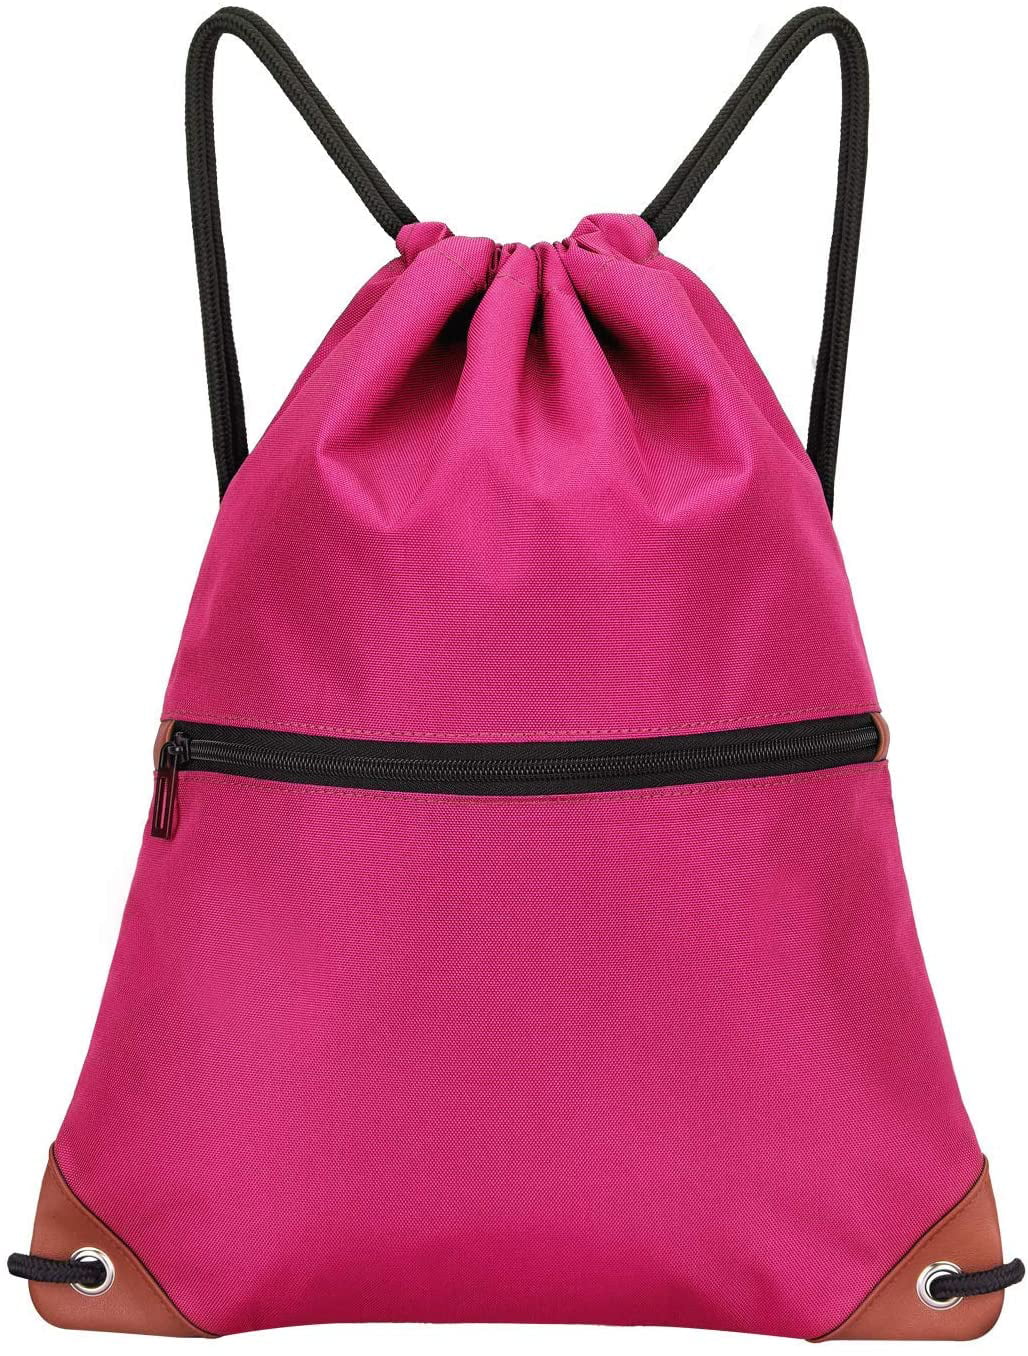 Original Floral Drawstring Bag String Backpack for Travel,Gym,School,Beach,2 Size & 20 Colors 